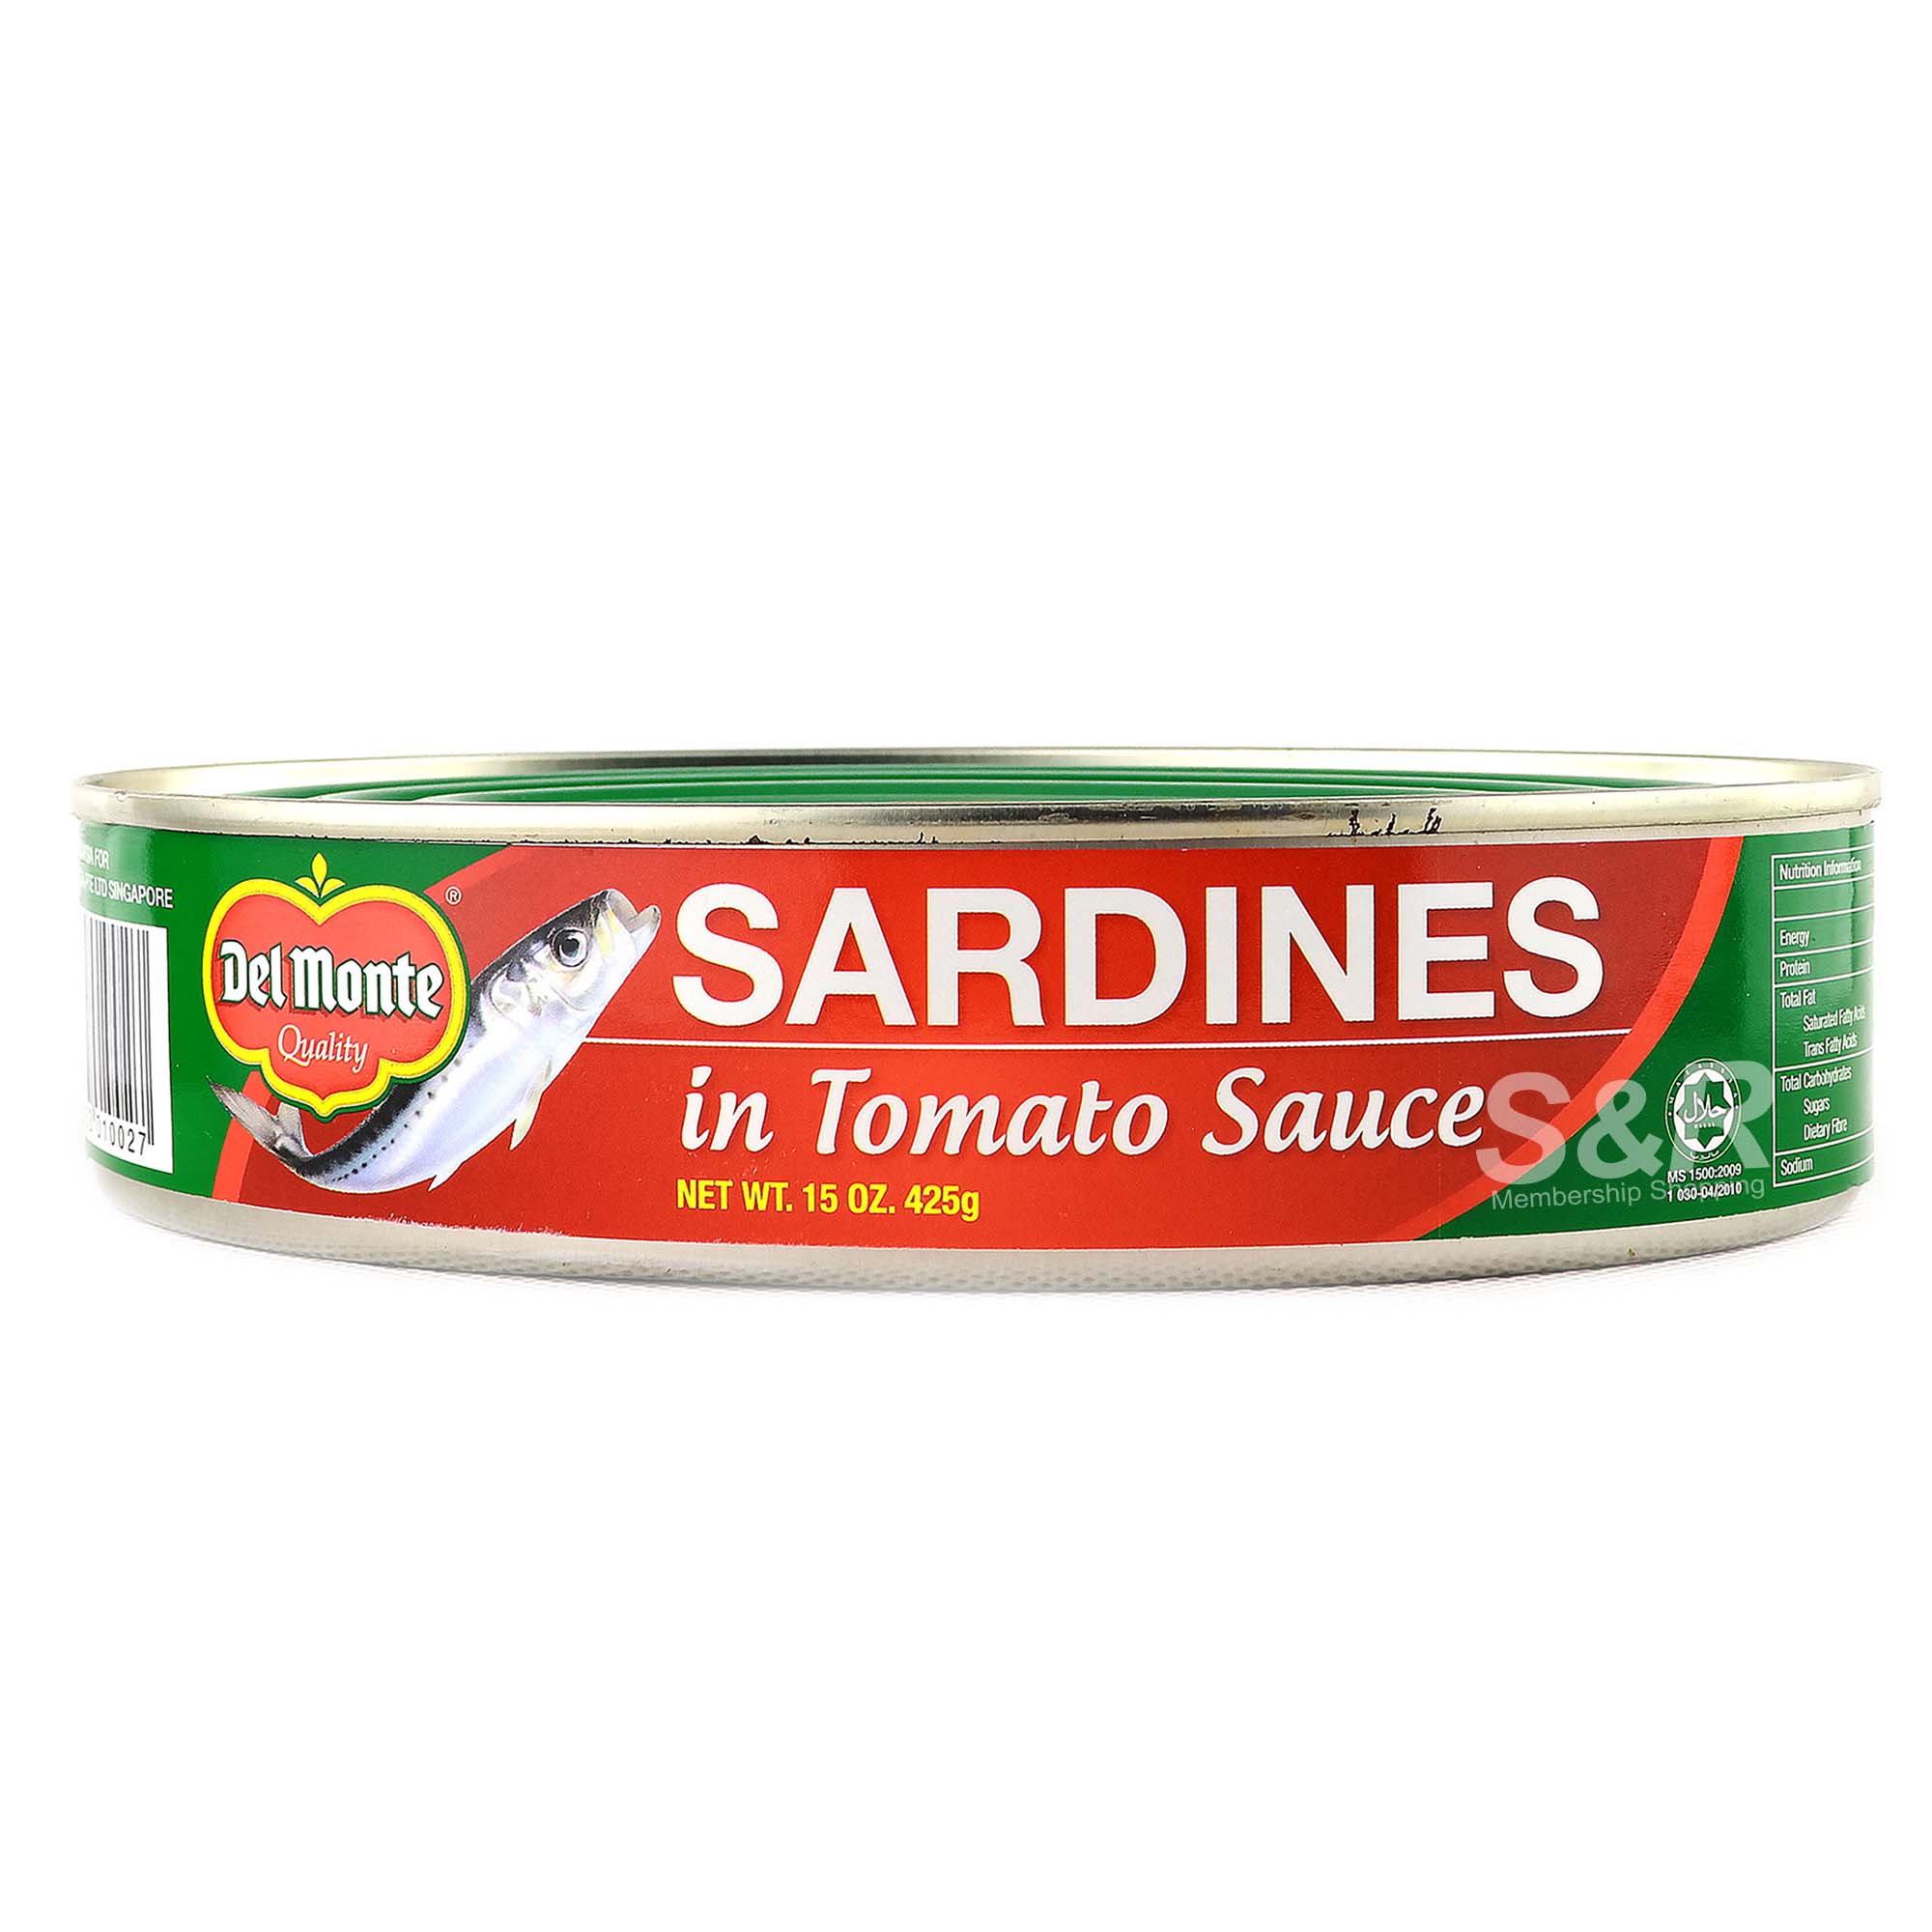 Del Monte Sardines in Tomato Sauce 425g